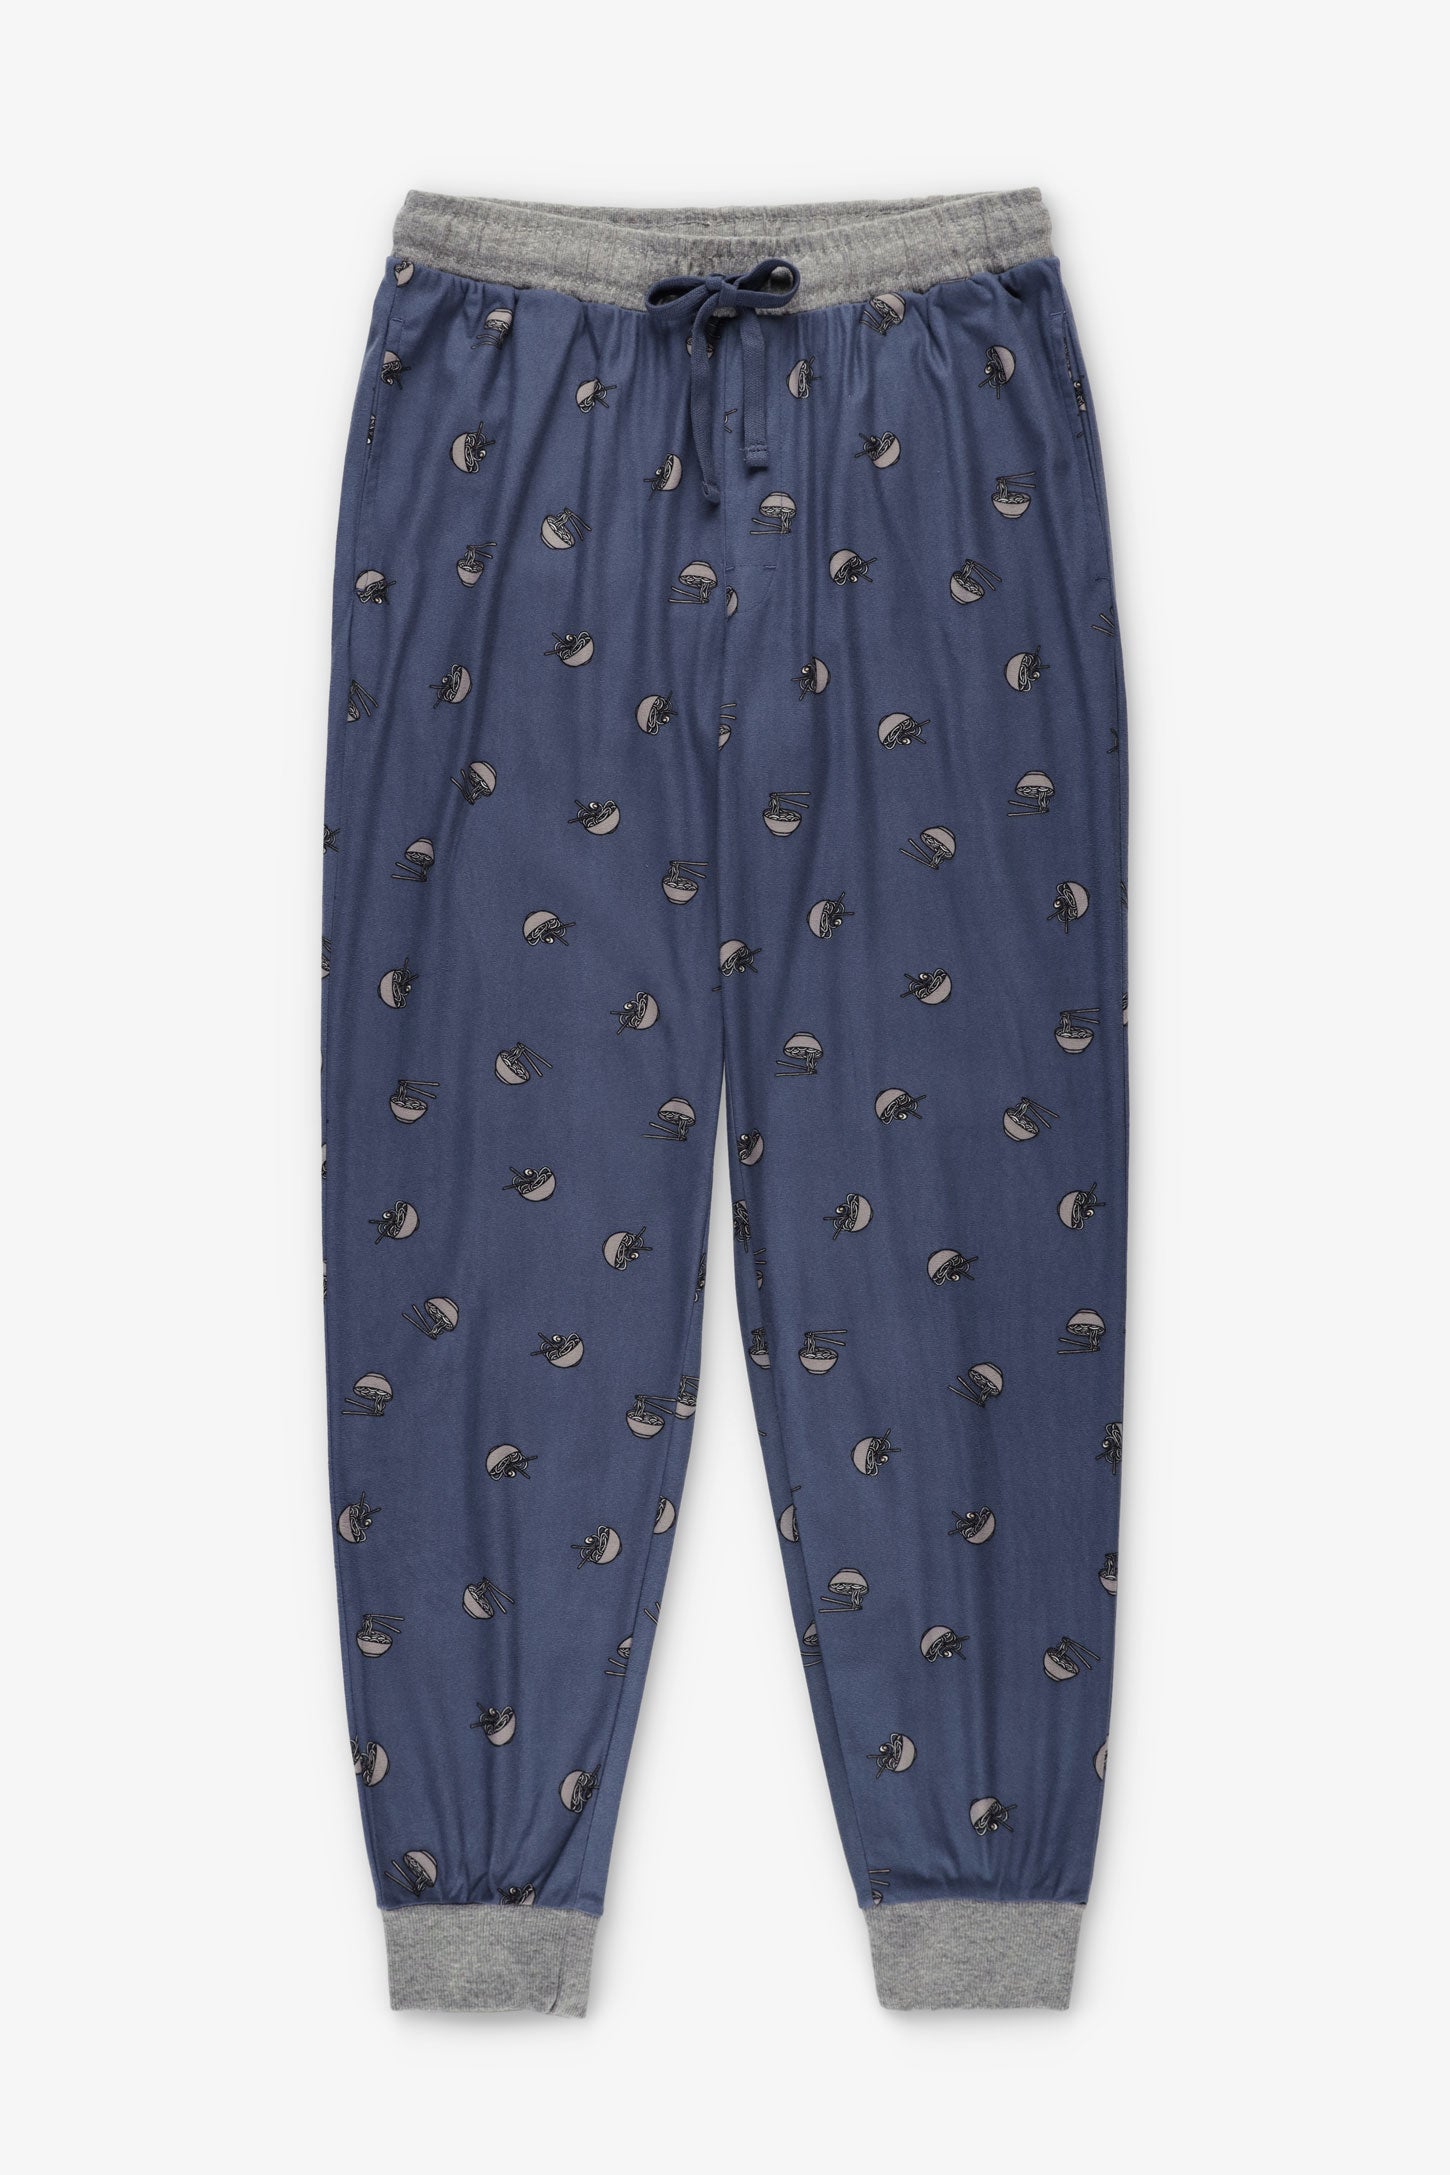 Pantalon jogger pyjama  - Homme && MARIN/MULTI